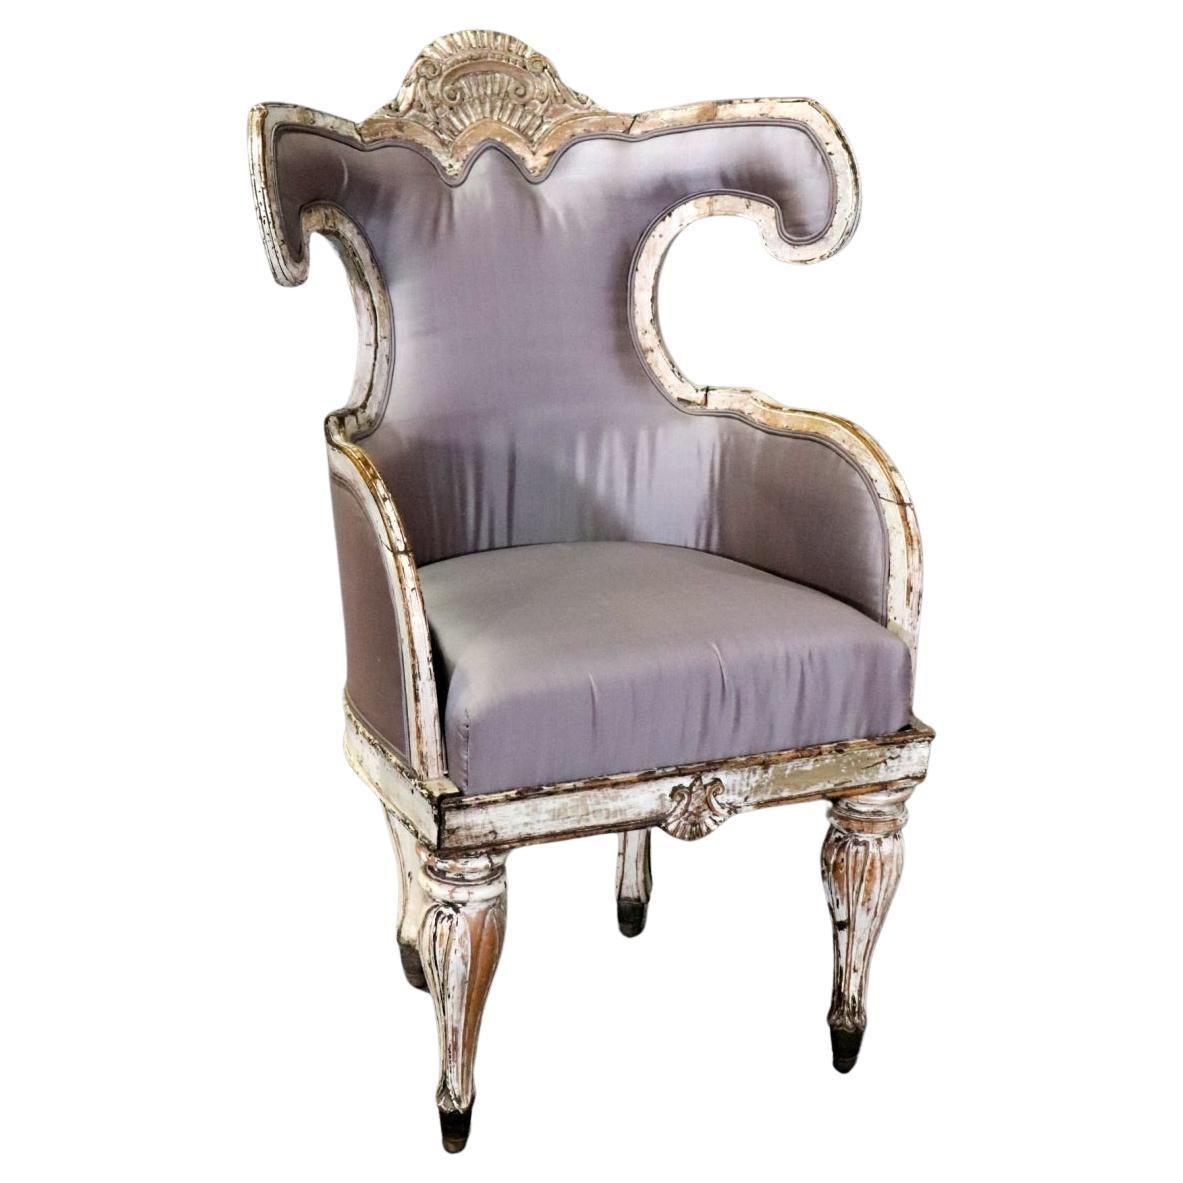 Rare Period 1740-60s era Swedish Gustavian Baroque Bergere Chair For Sale